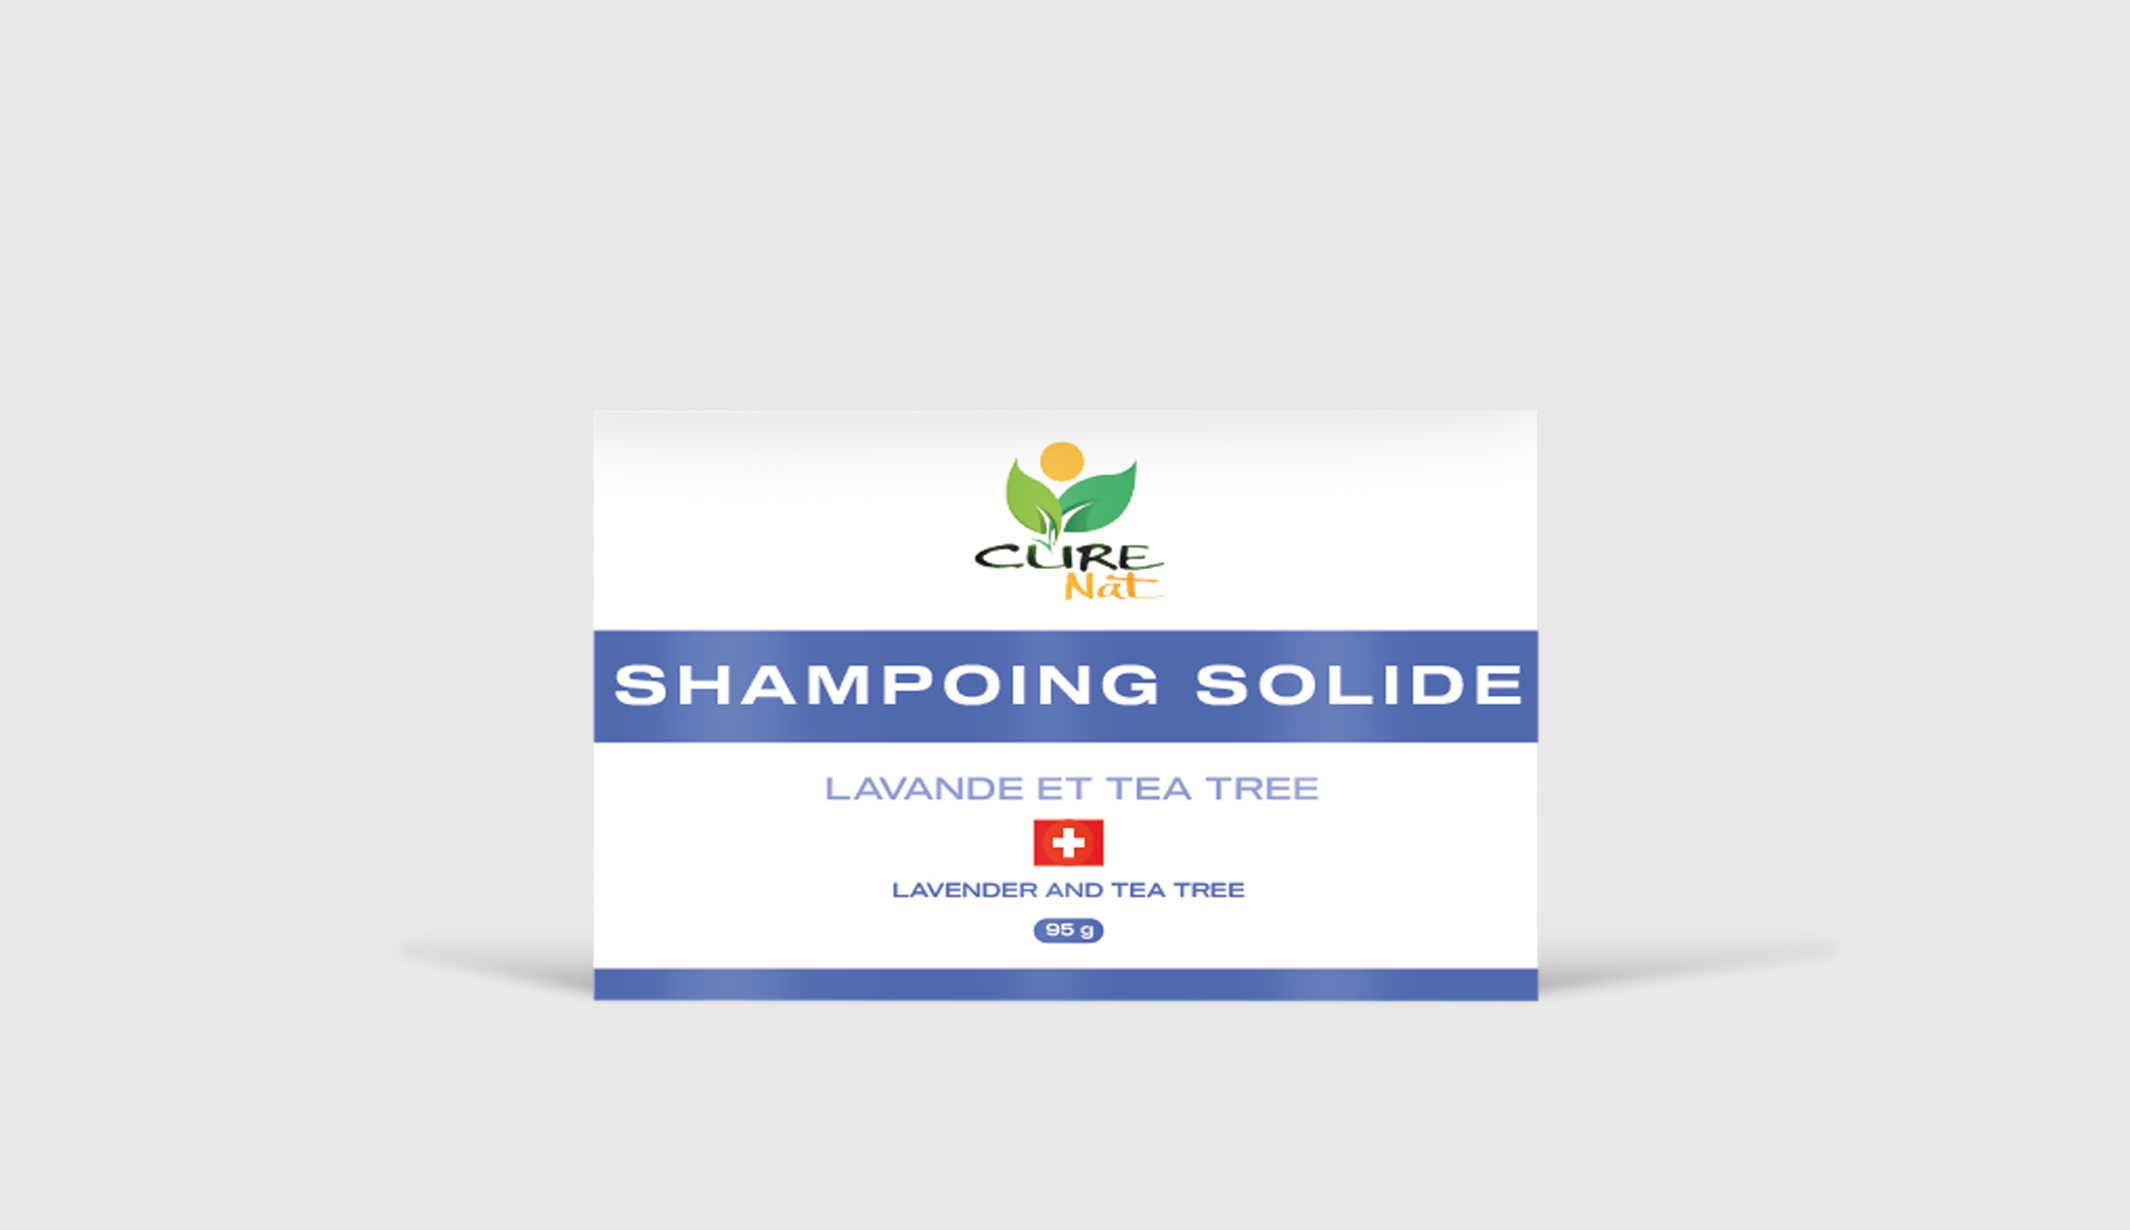 Shampoing Solide Lavande et Tea Tree